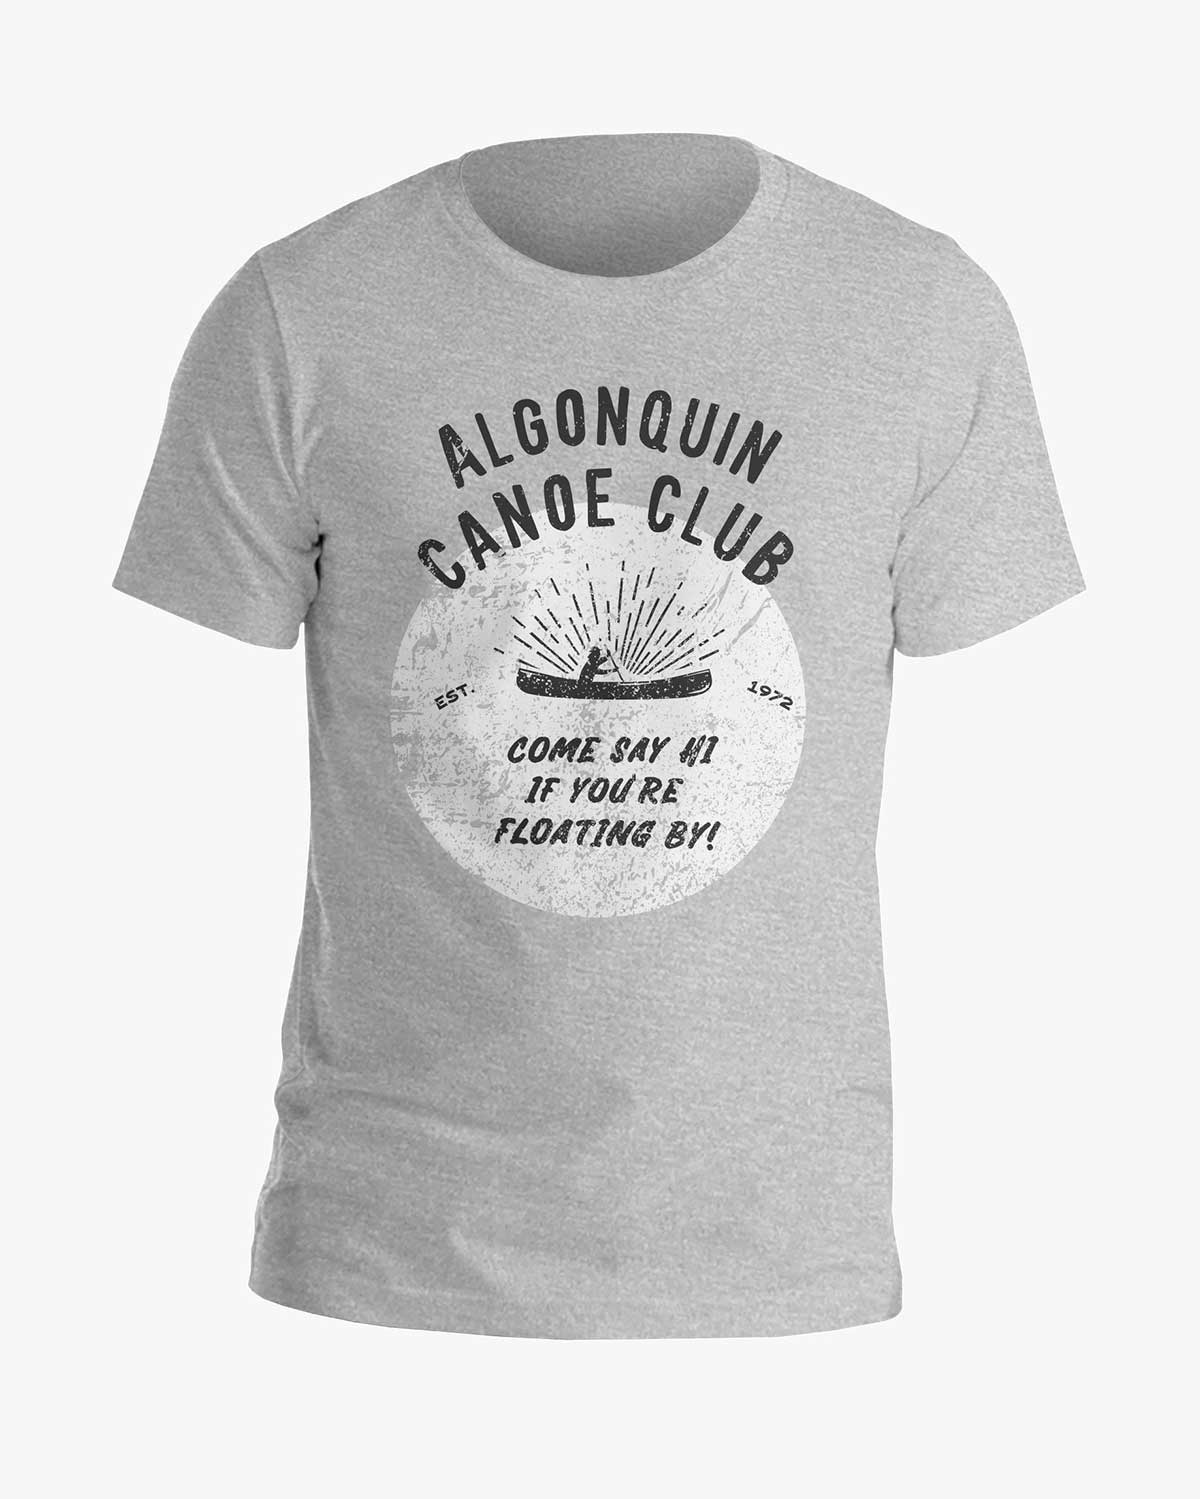 Canoe Club - Algonquin - Tee